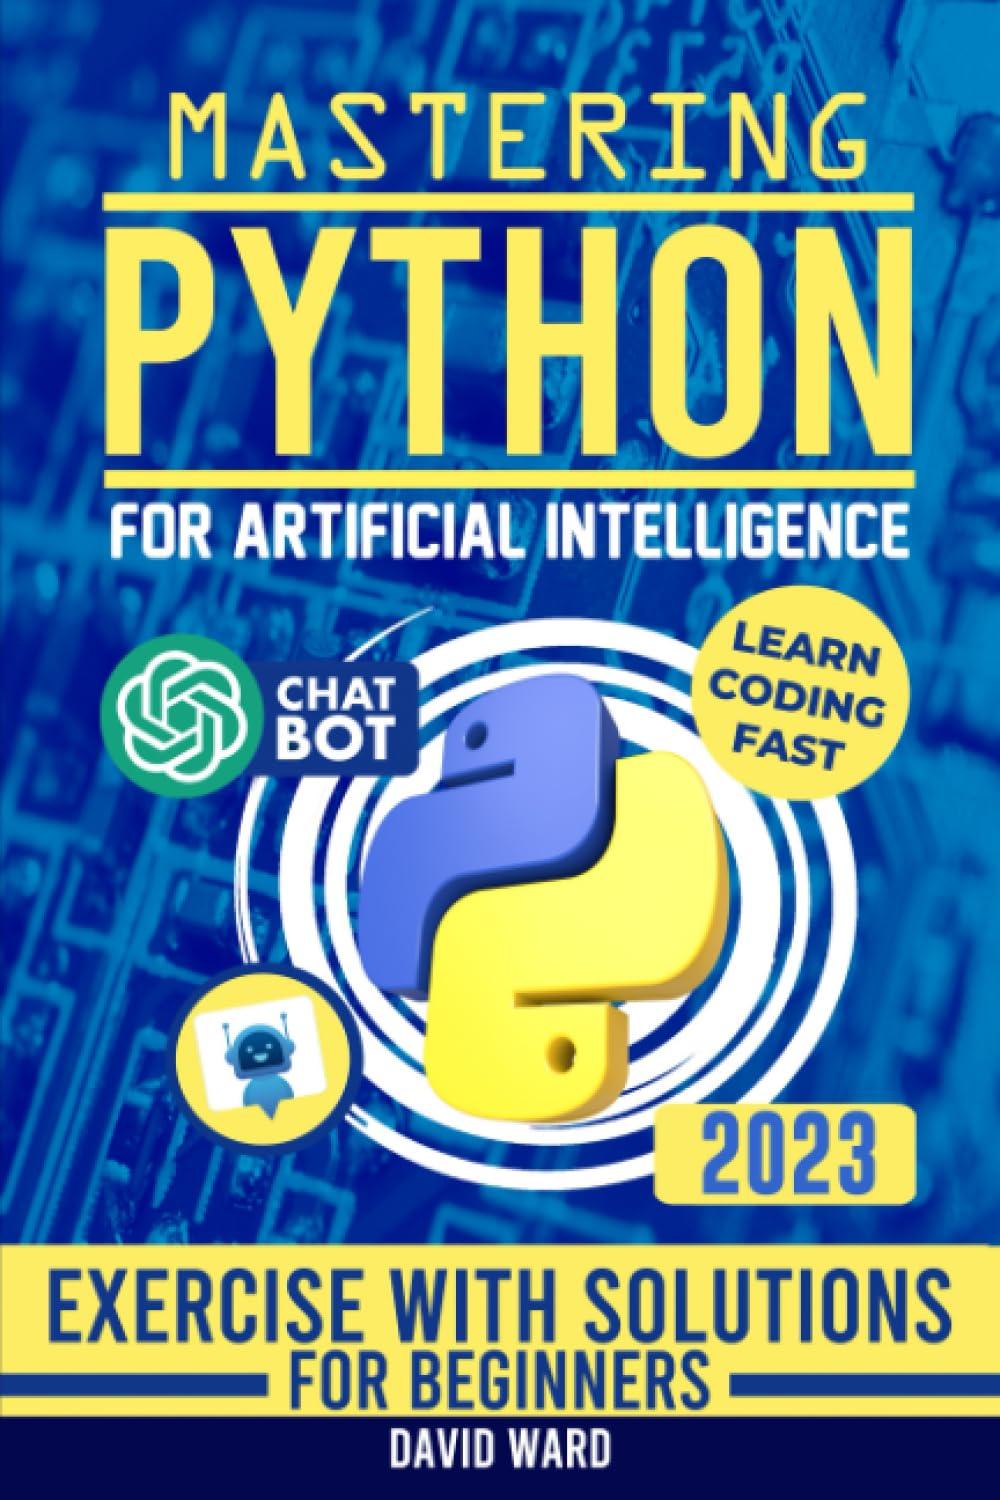 mastering python for artificial intelligence 1st edition david ward b0c9s9cds8, 979-8851200434